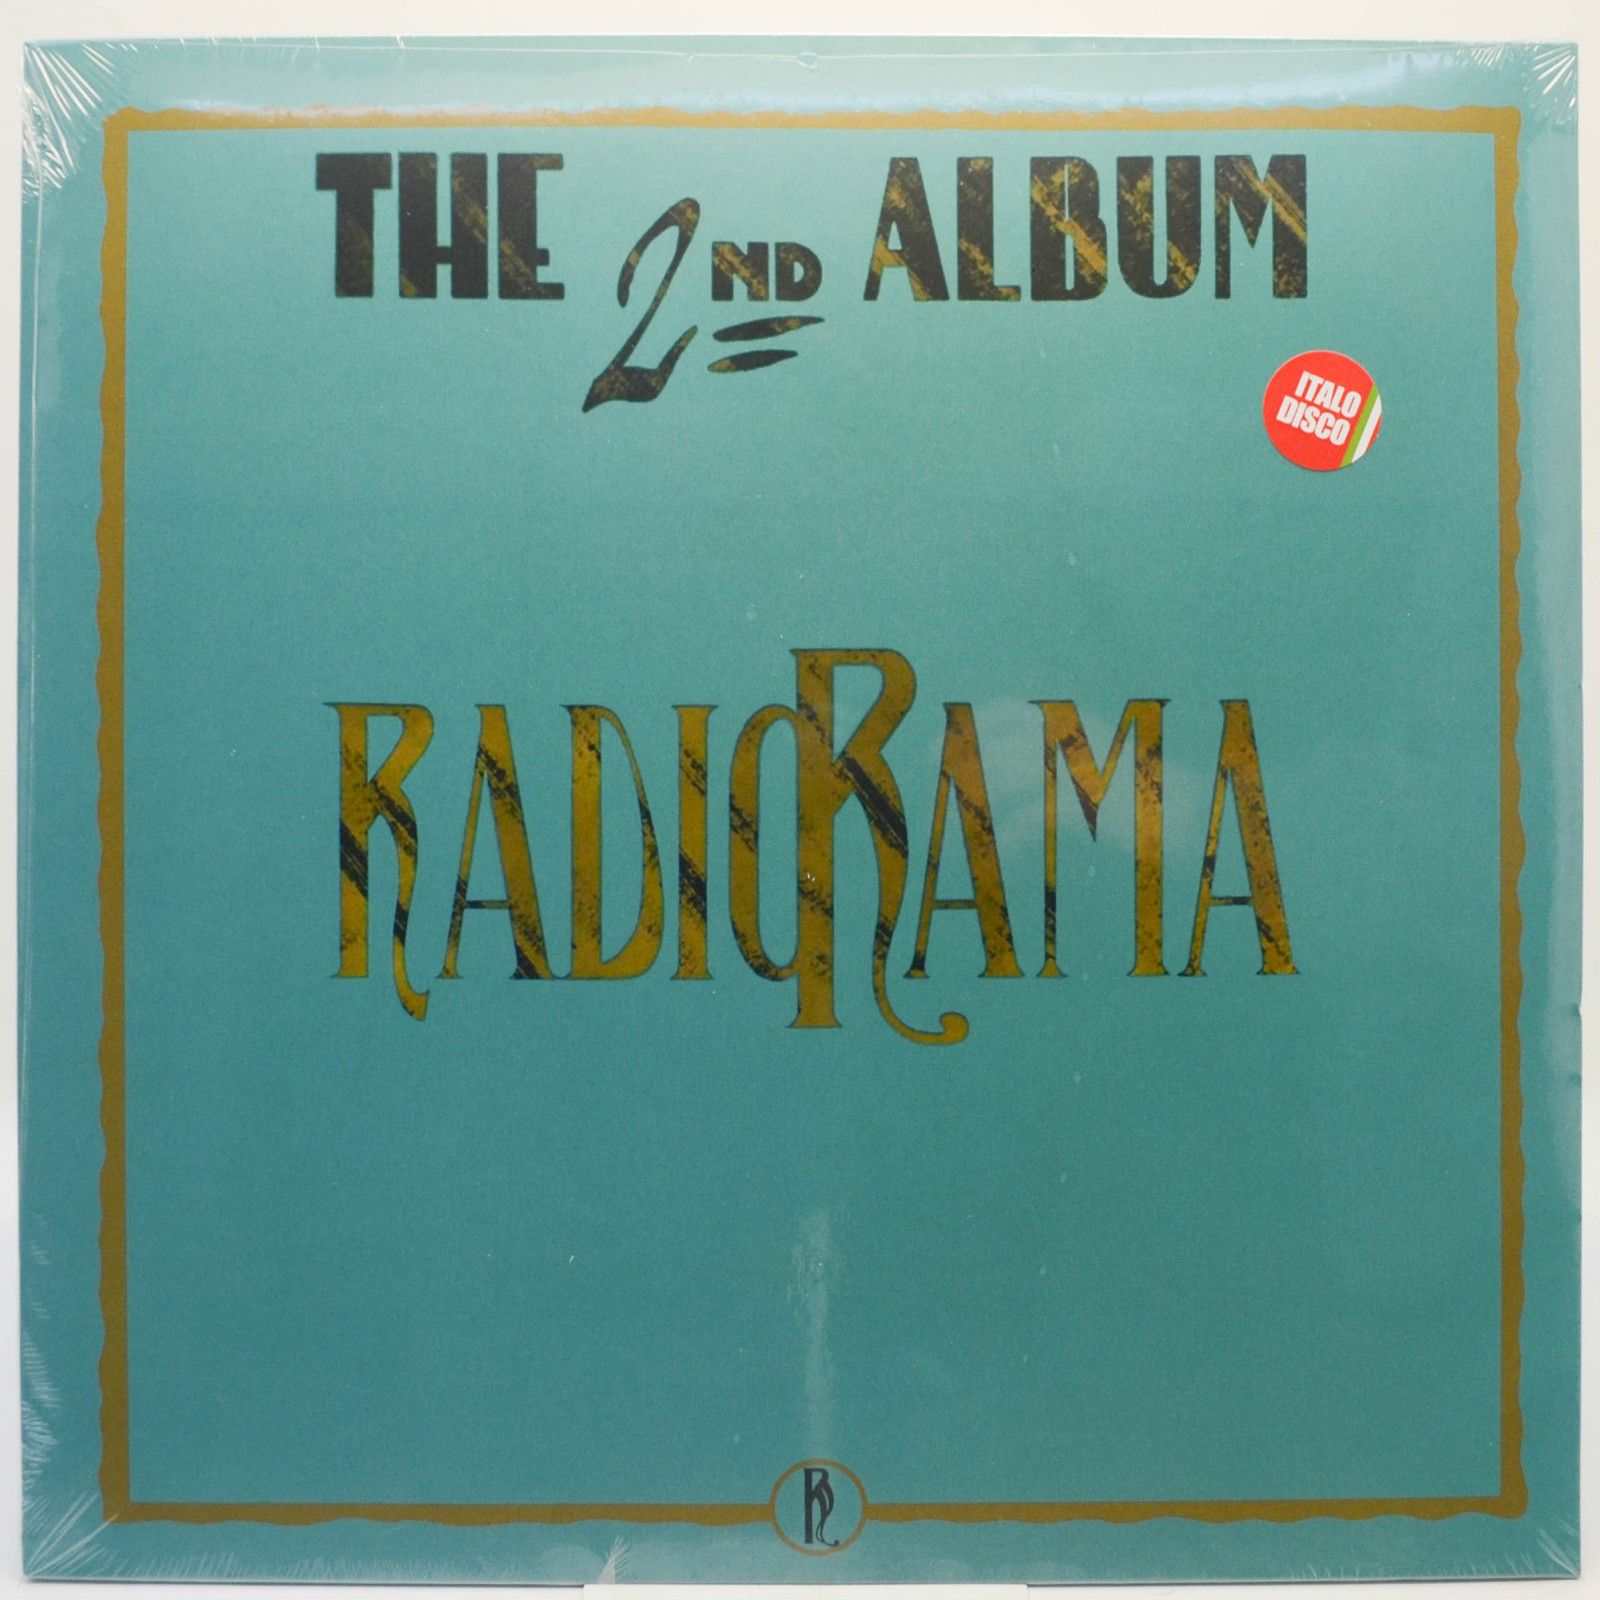 Radiorama — The 2nd Album, 1987